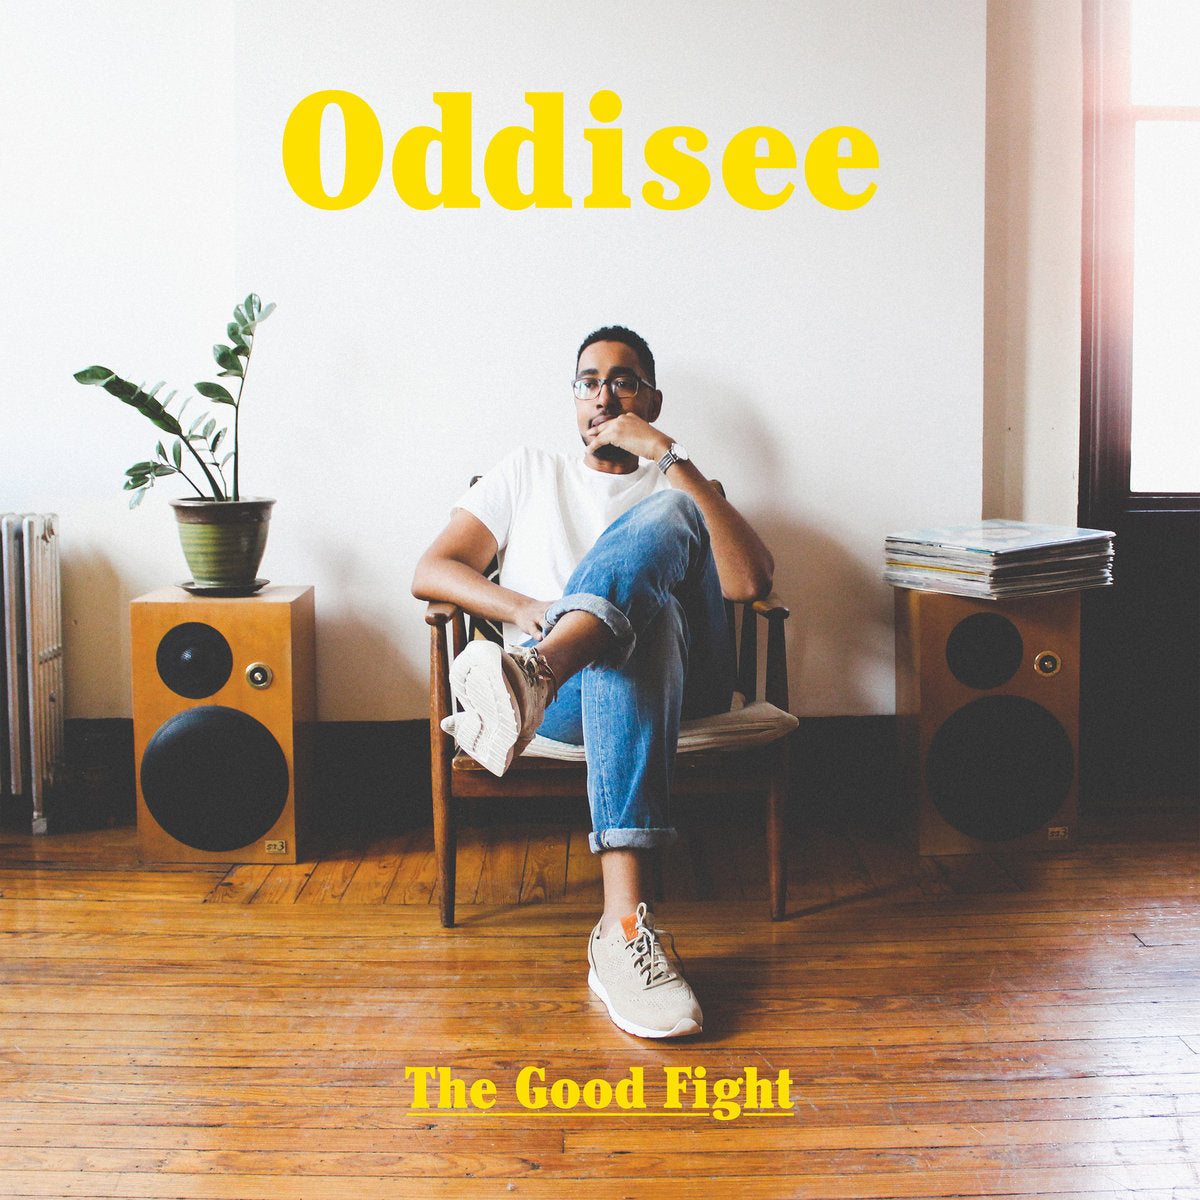 Oddisee / The Good Fight [YELLOW DROP VINYL IMPORT] – New LP